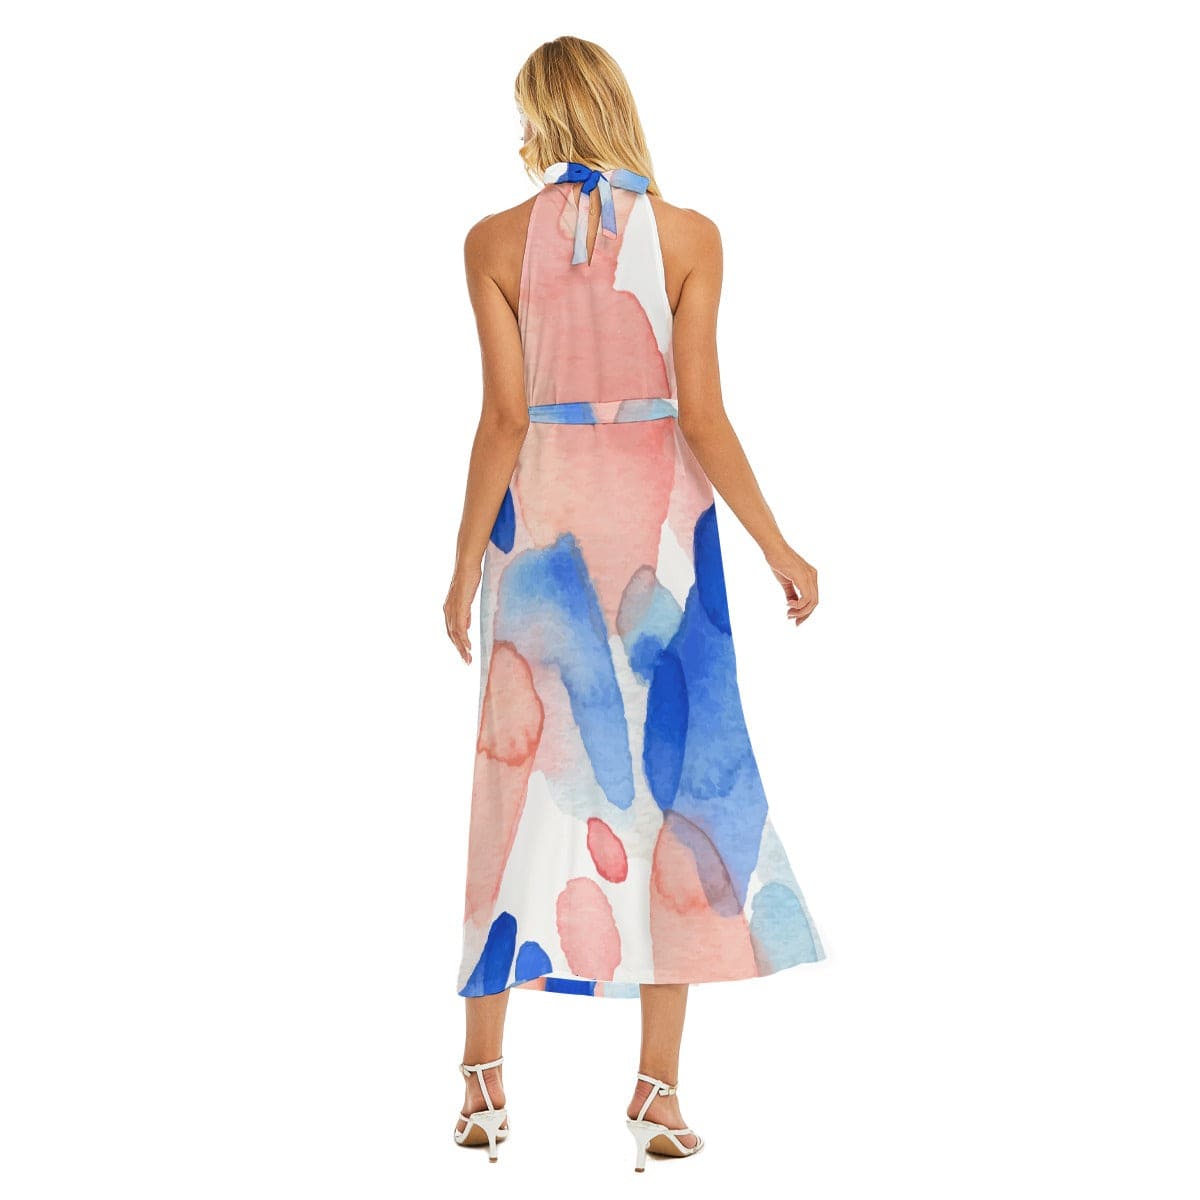 Yoycol Dresses Watercolors Women's Wrap Hem Belted Halter Dress